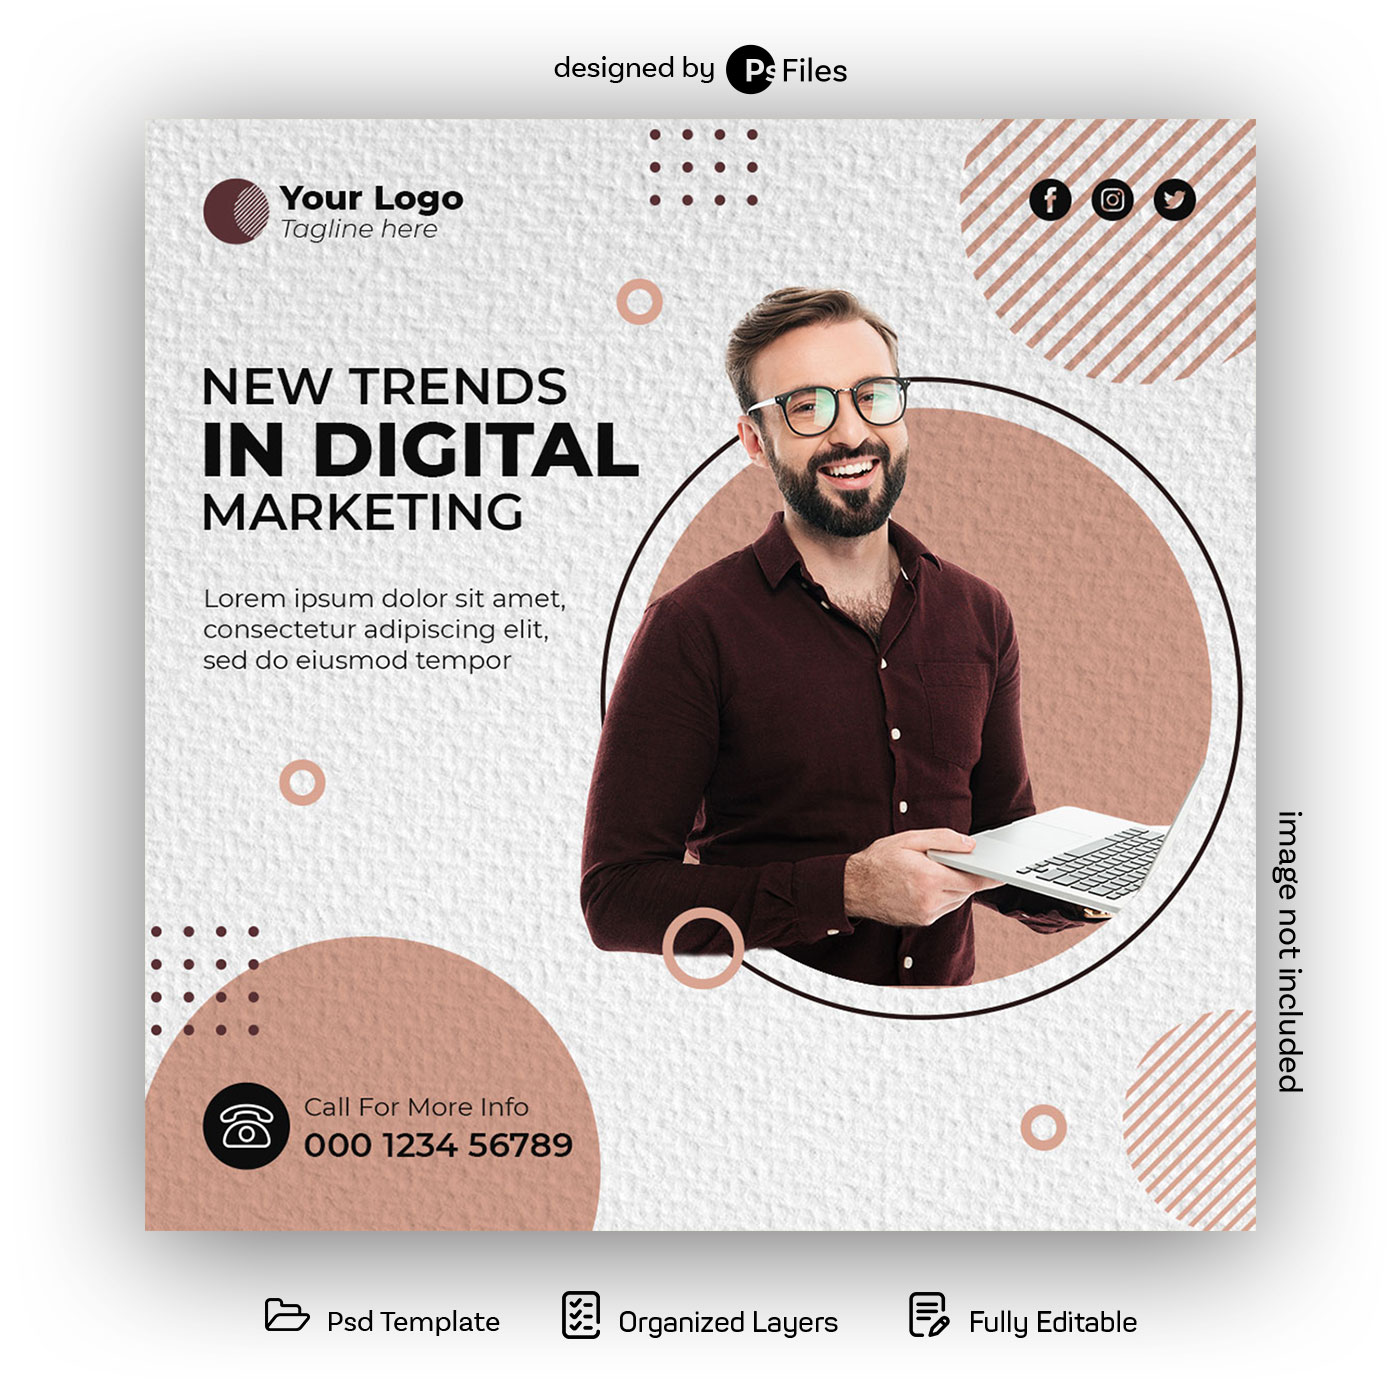 New Trends in Digital Marketing Free Instagram Post Design Template PSD